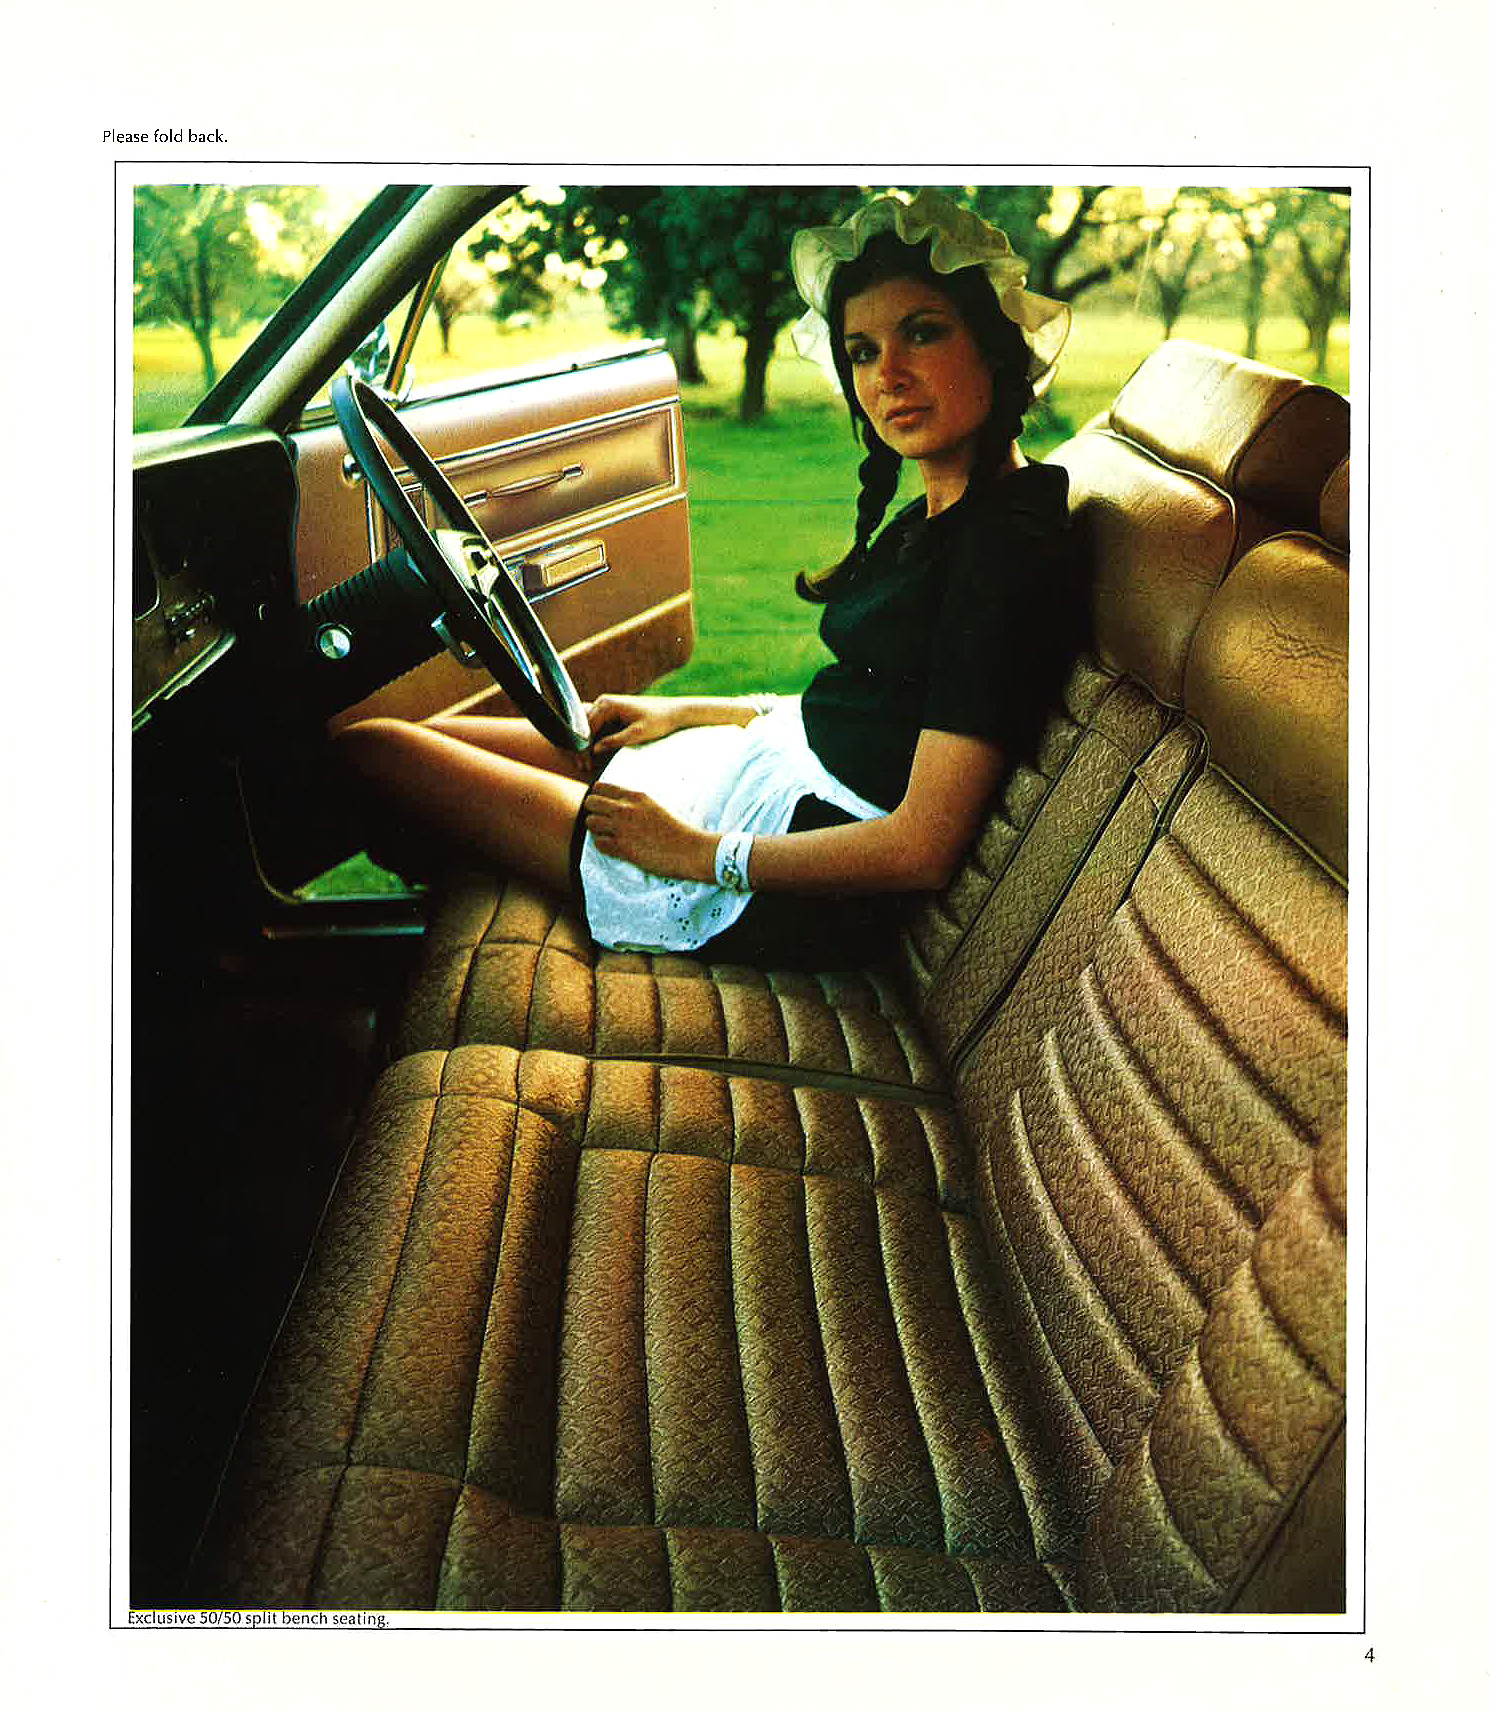 1971 Valiant VH - Australia page_05